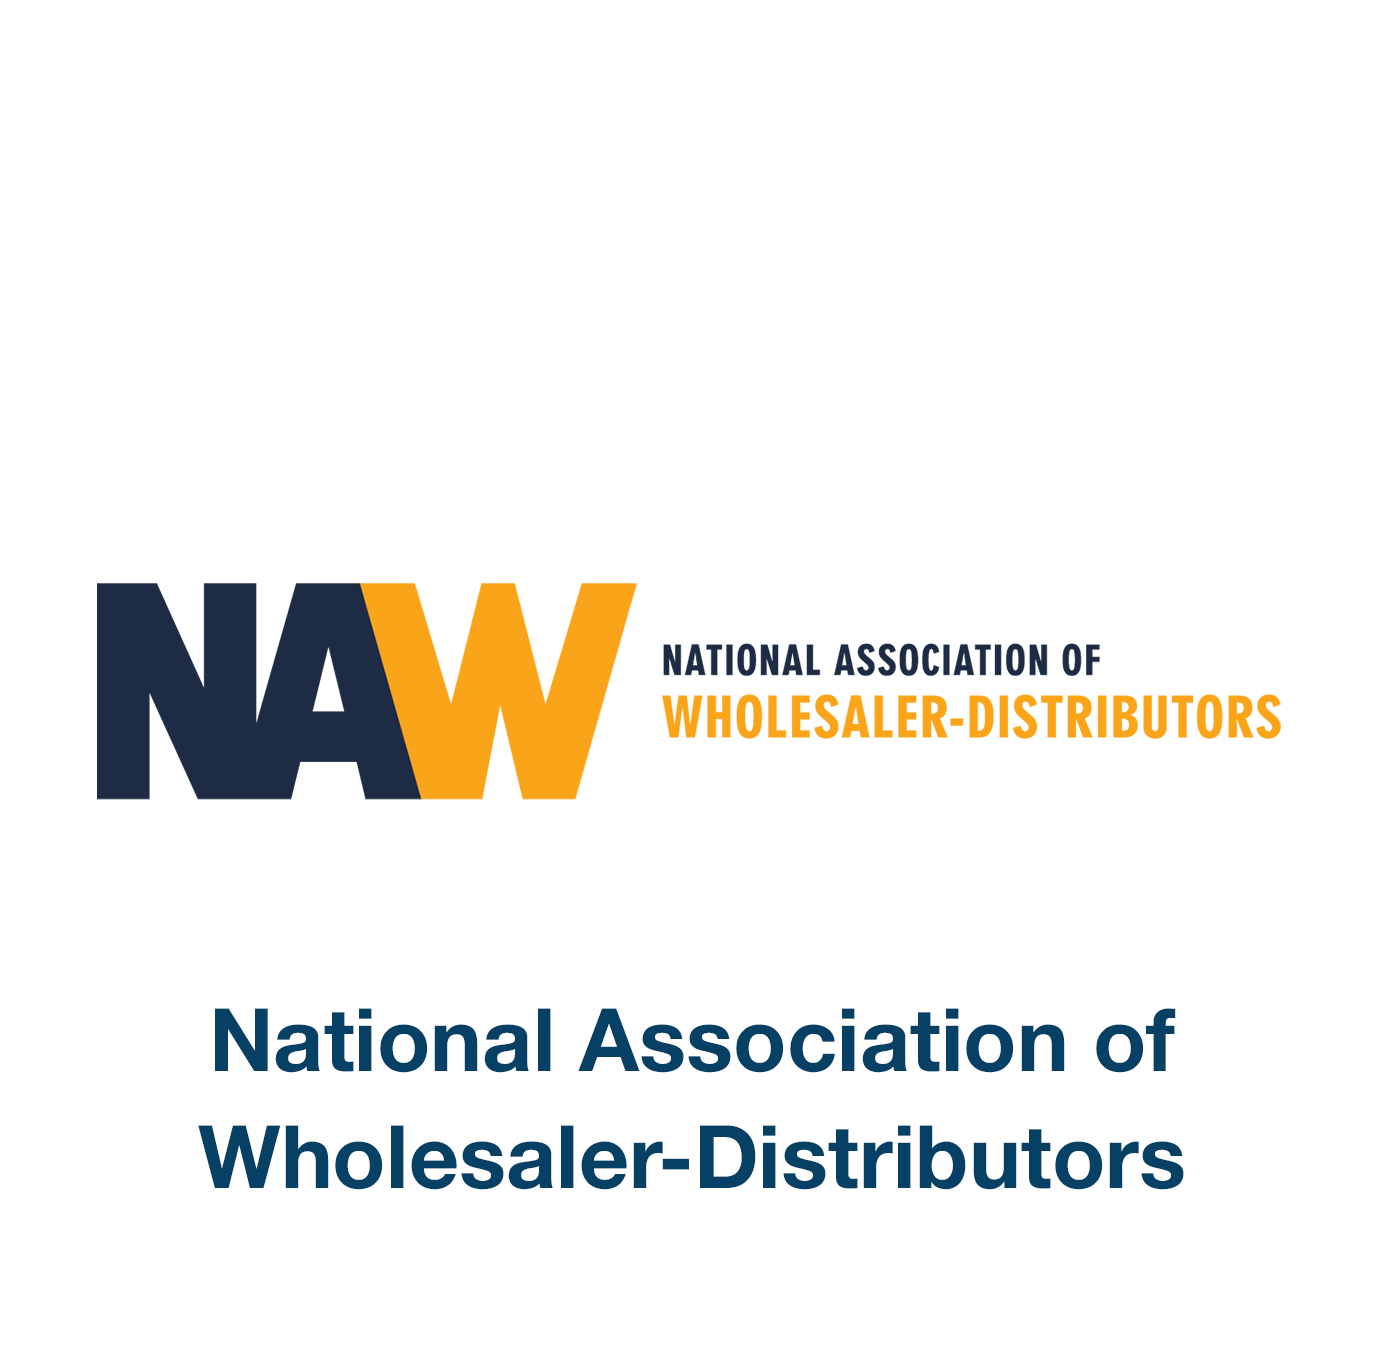 NAW (National Association of Wholesaler-Distributors)